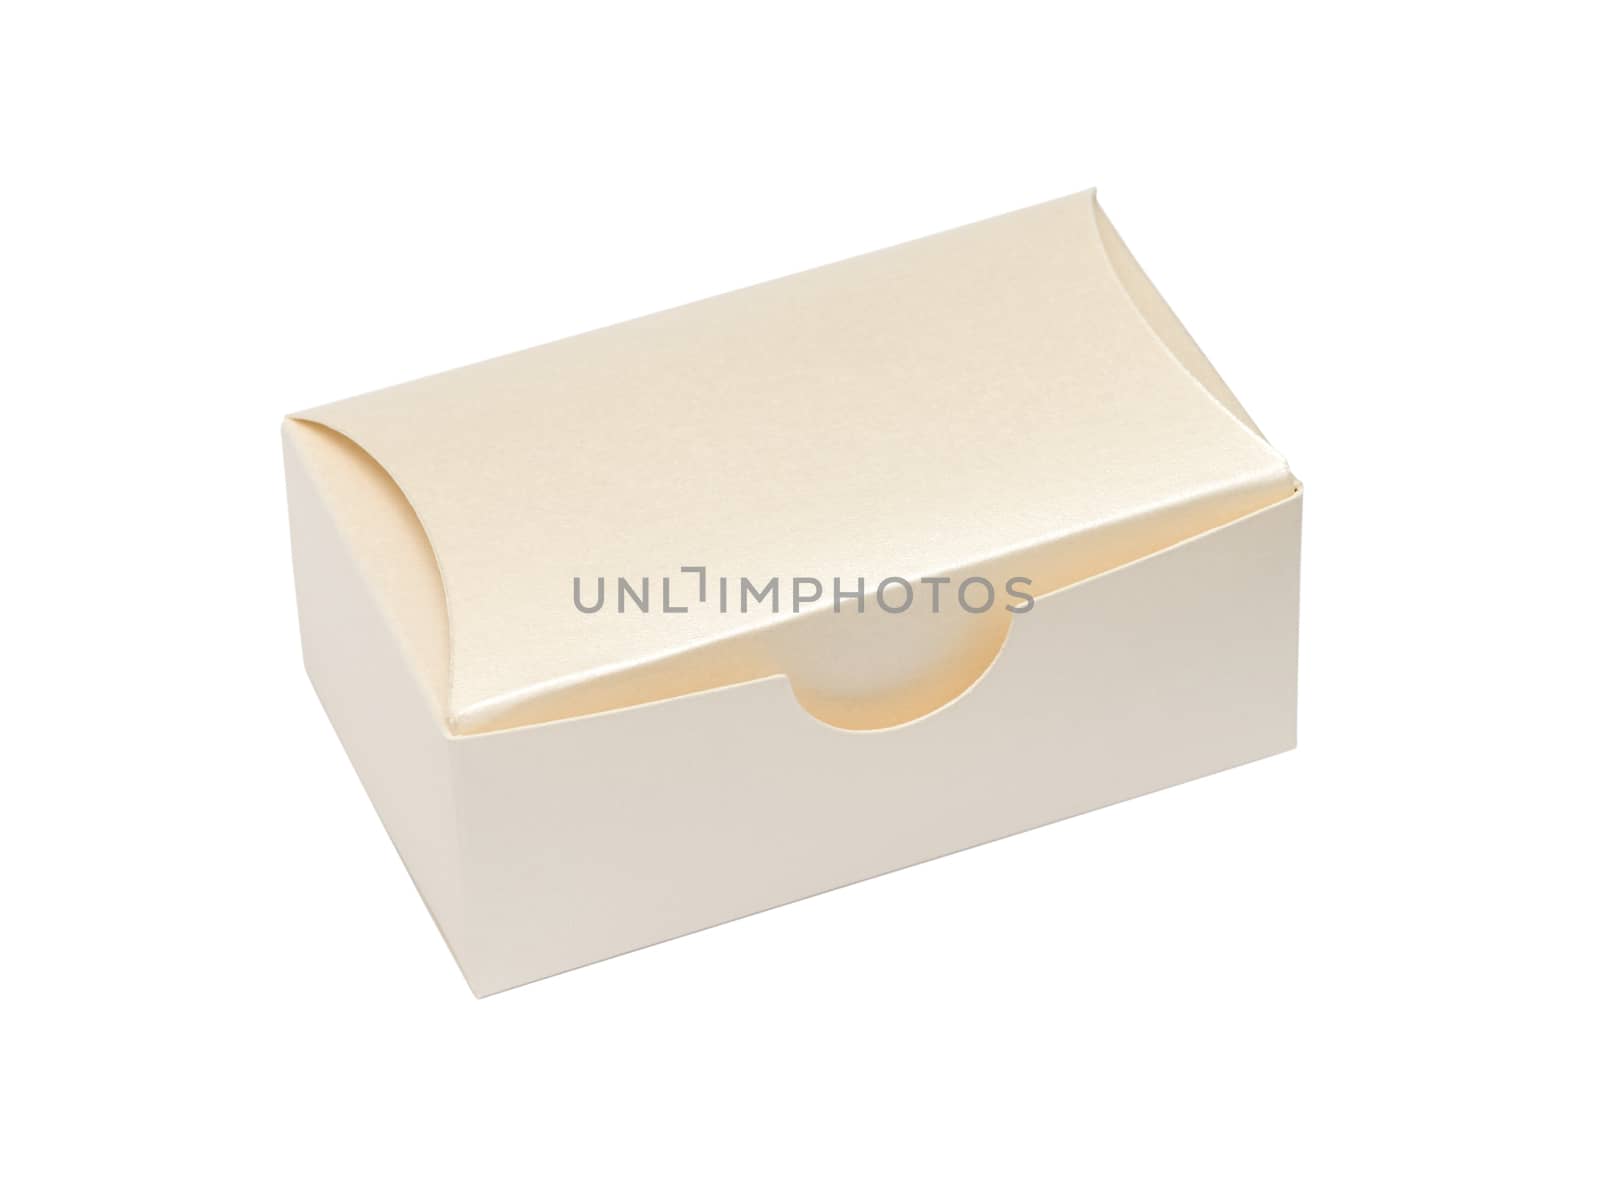 beige cardboard box on a white background by DNKSTUDIO